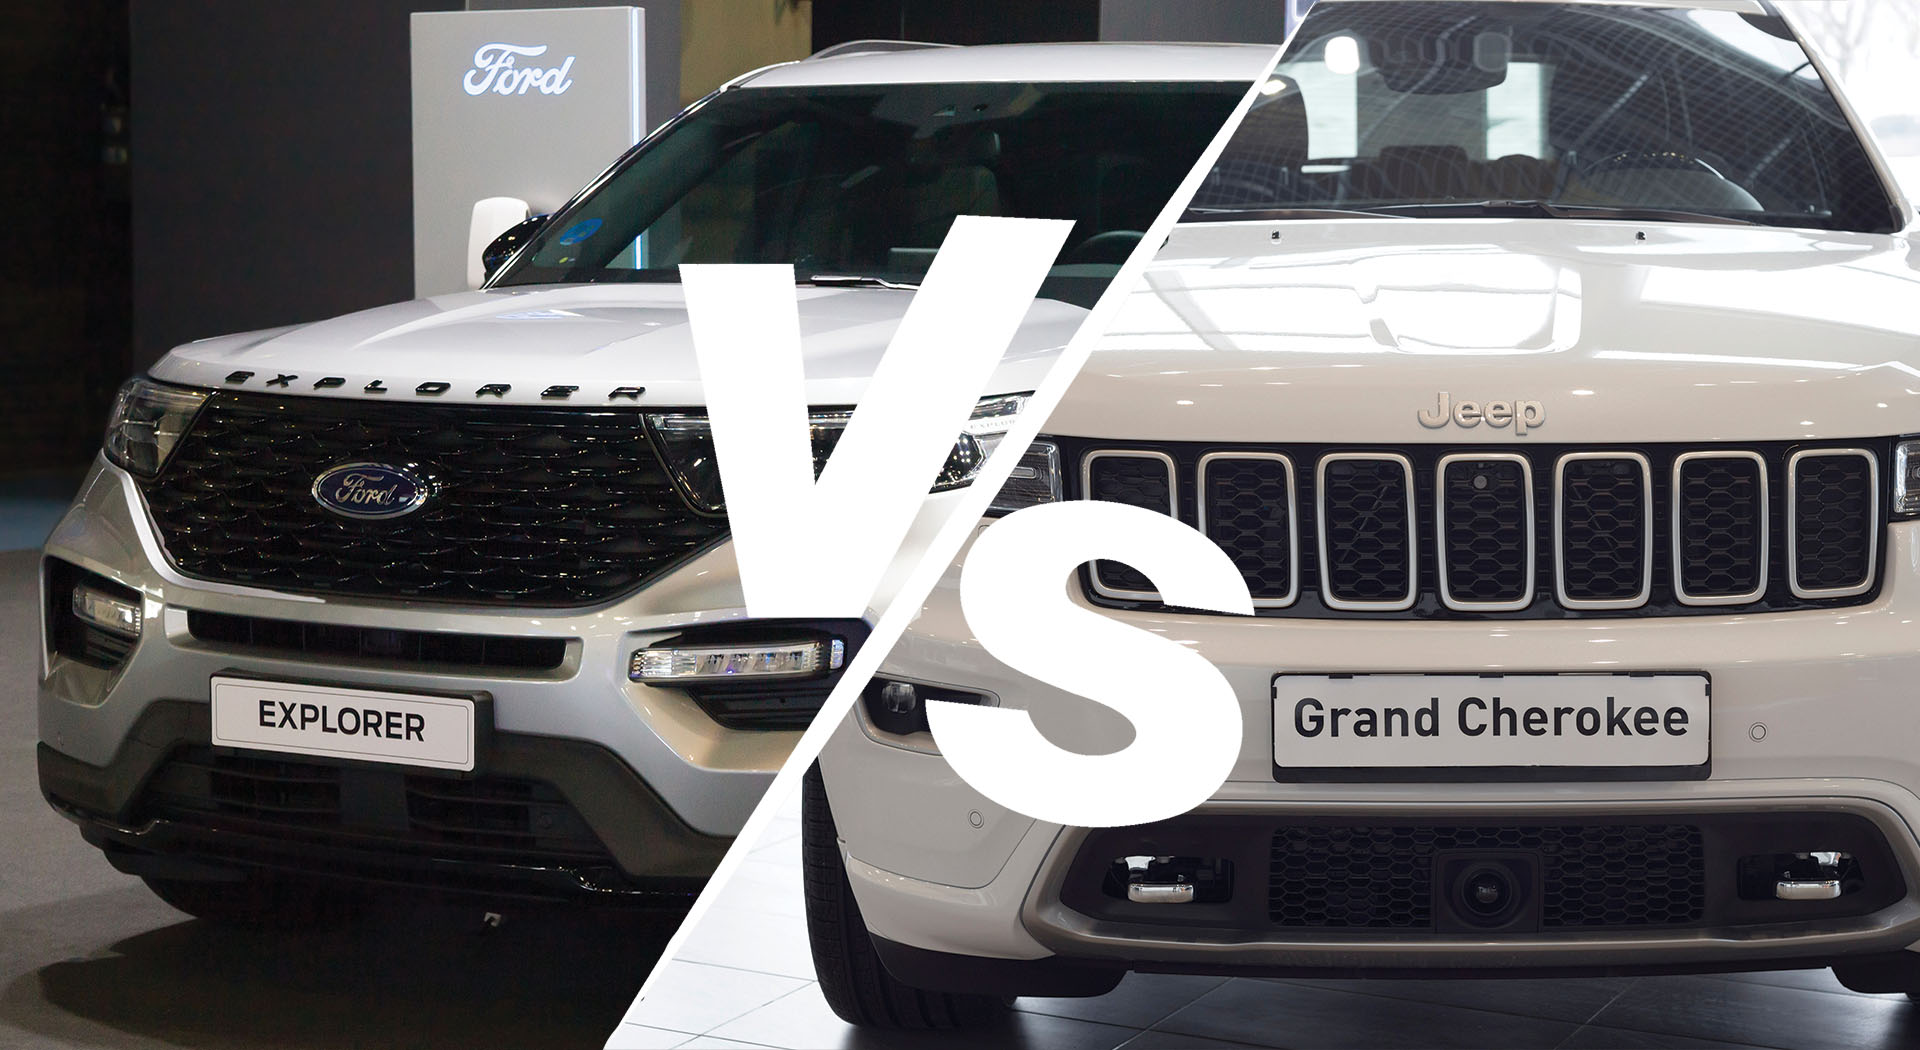 Jeep Grand Cherokee vs. Ford Explorer